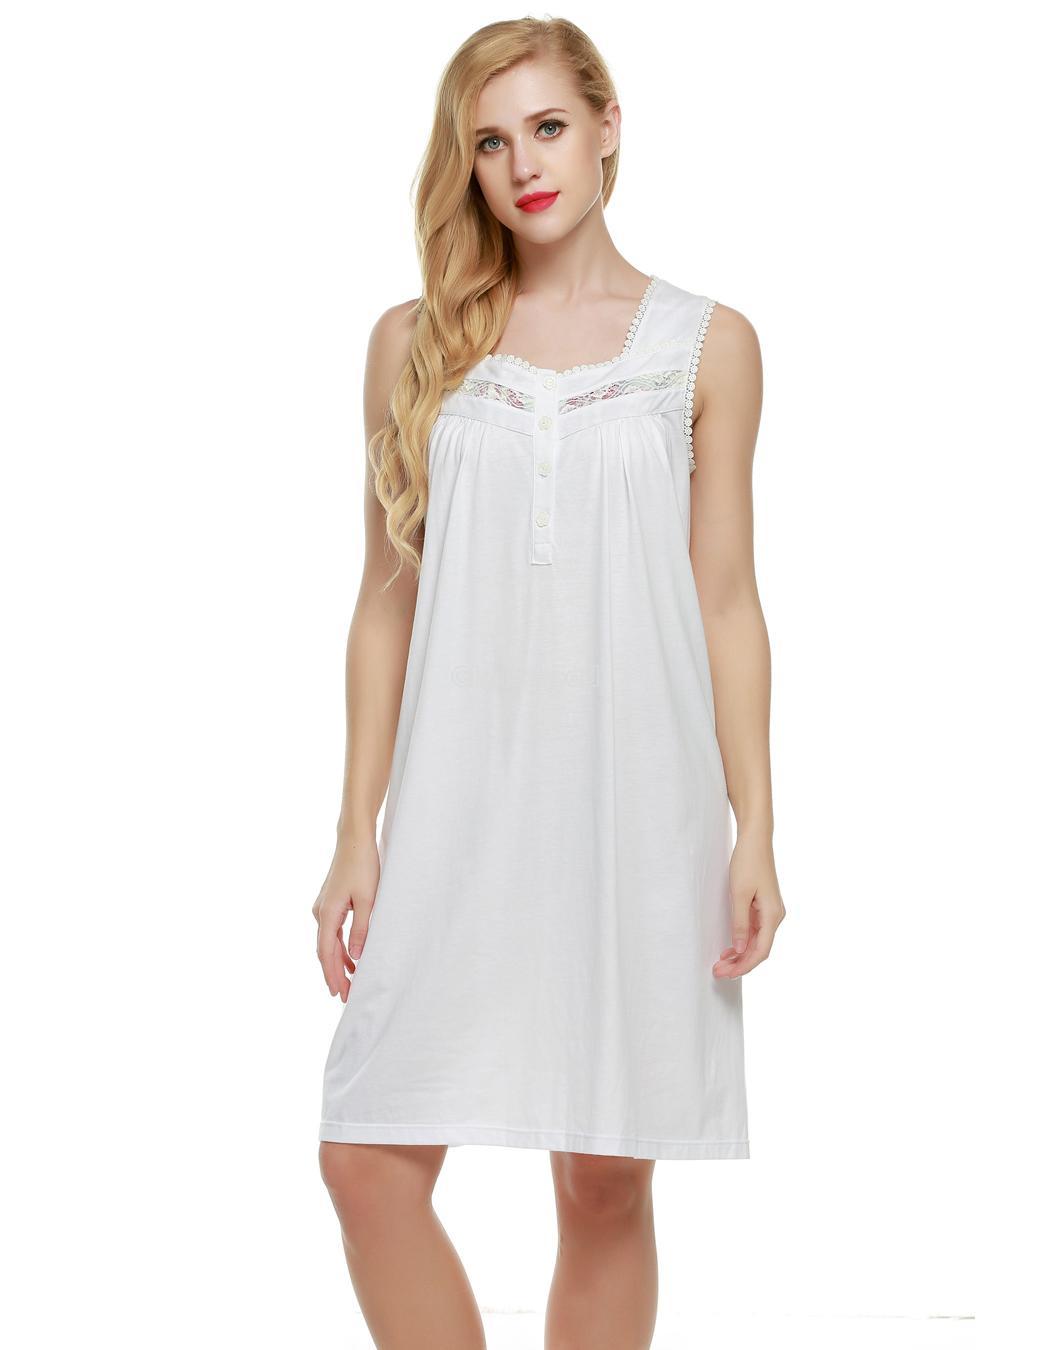 Women Sleepwear Sleeveless Summer Square Neck Short Nightgown ...